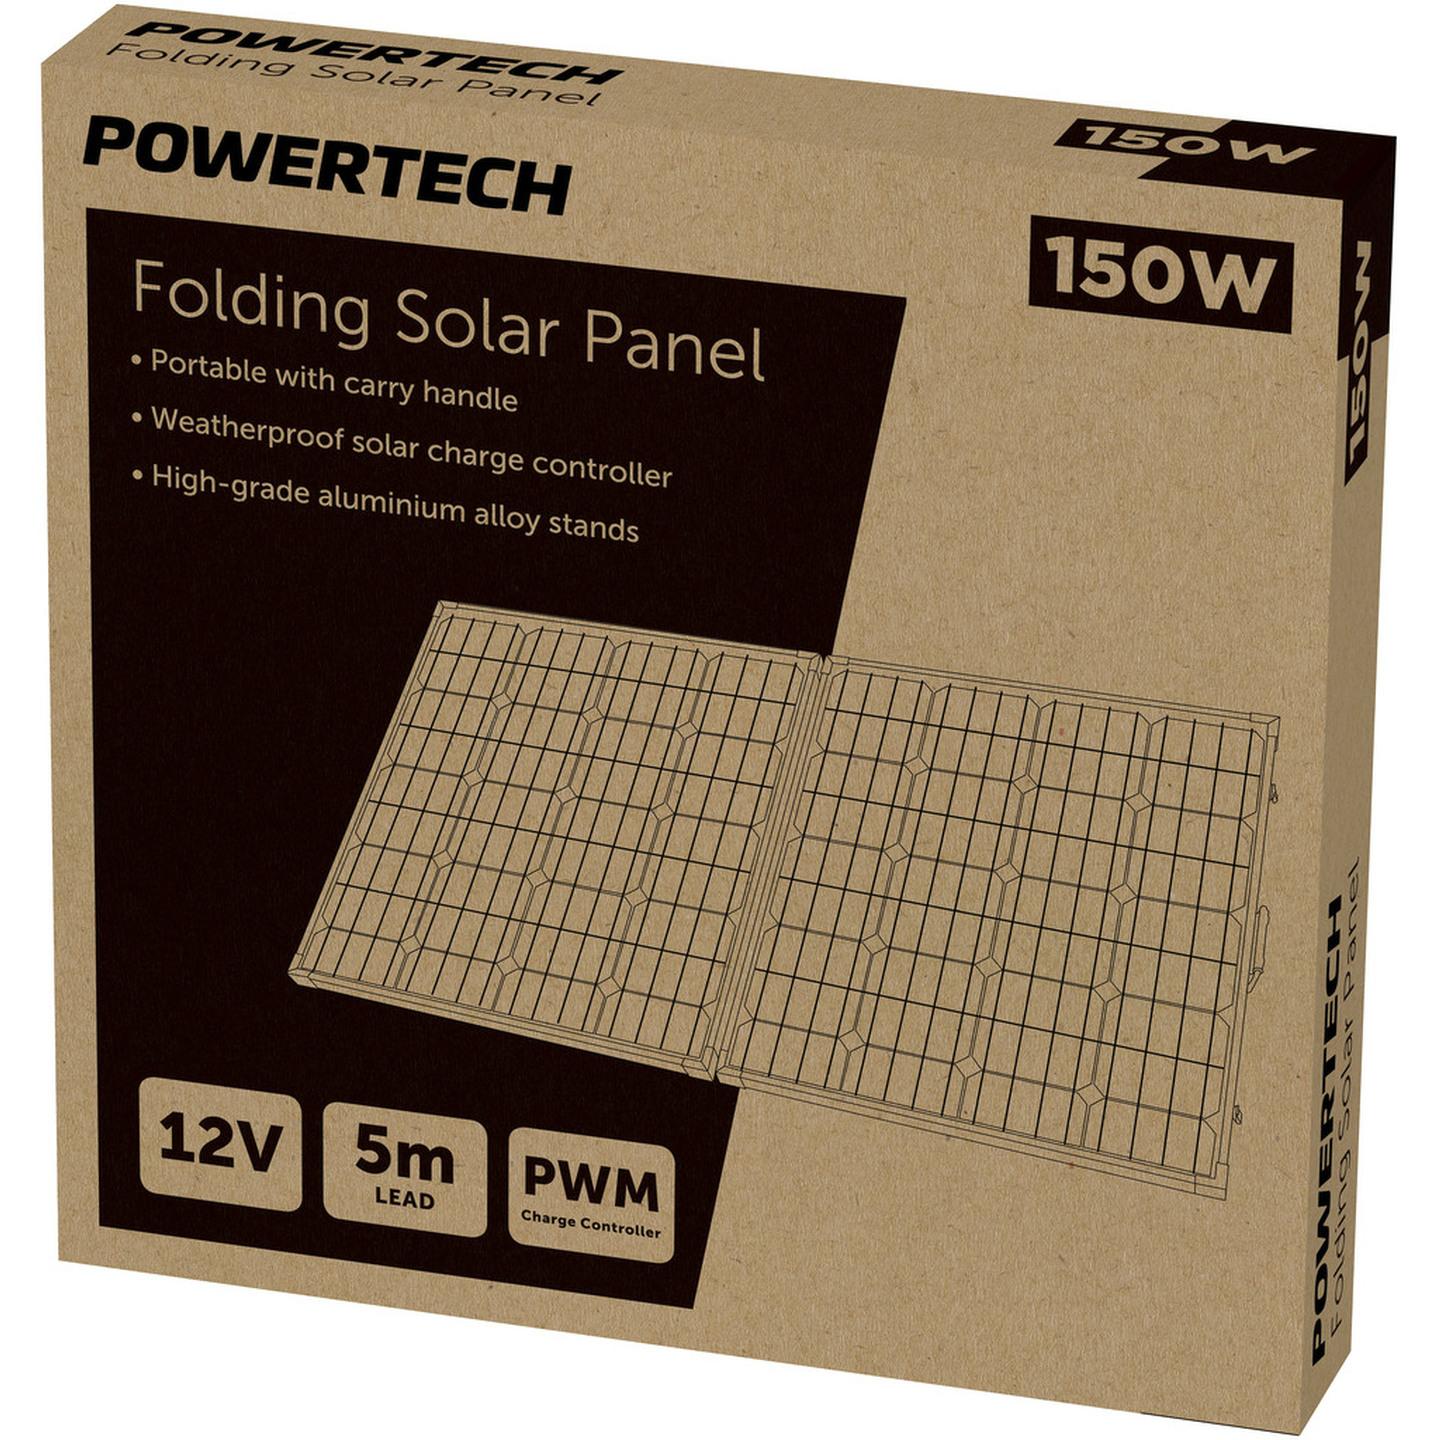 12V 150W Folding Solar Panel with 5M lead